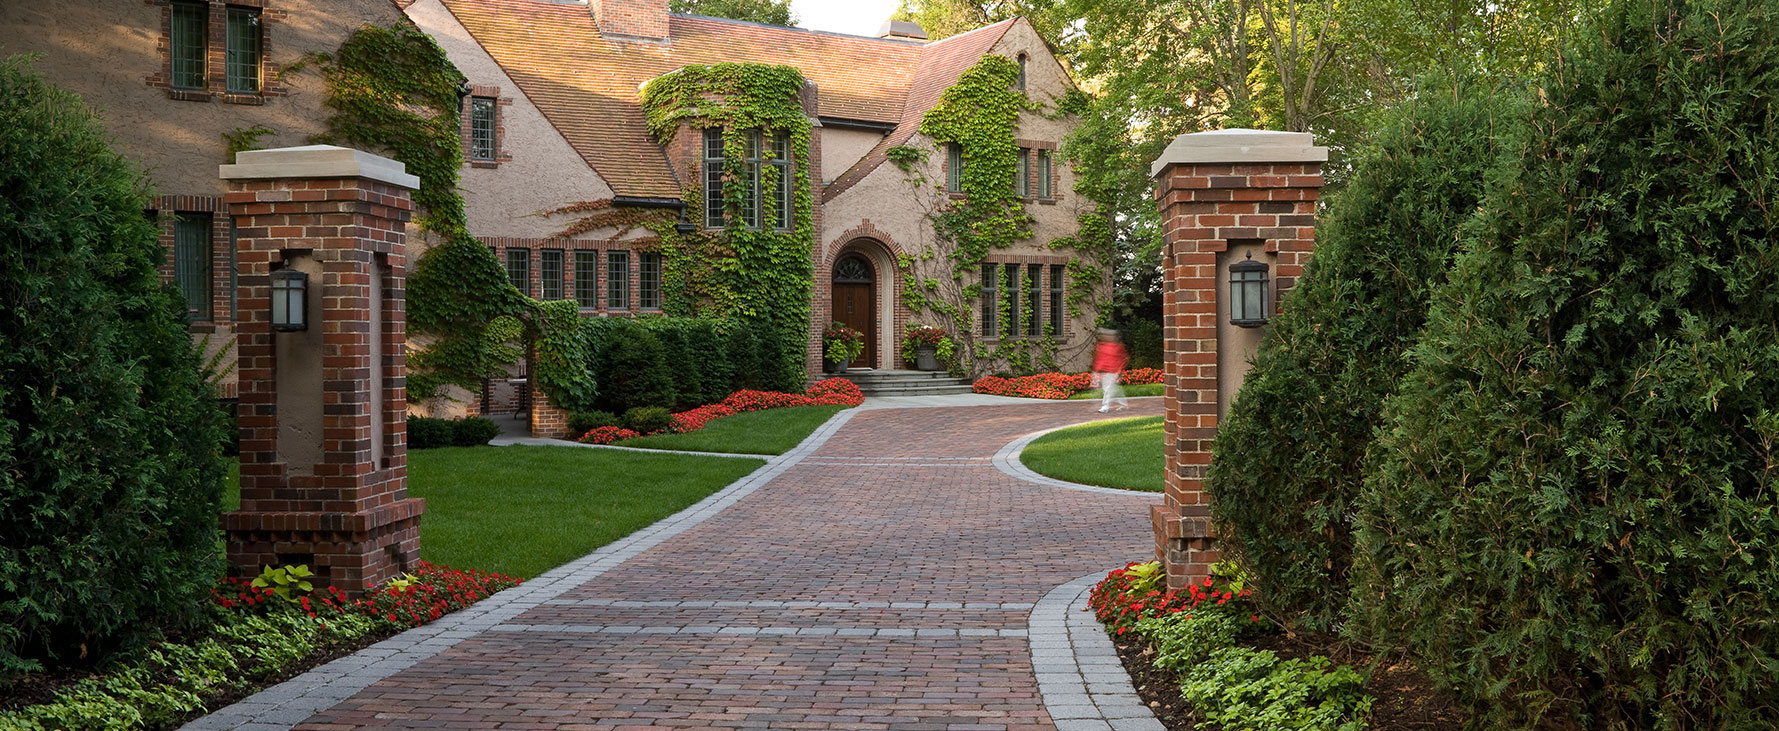 Red brick mansion with matching brick driveway.